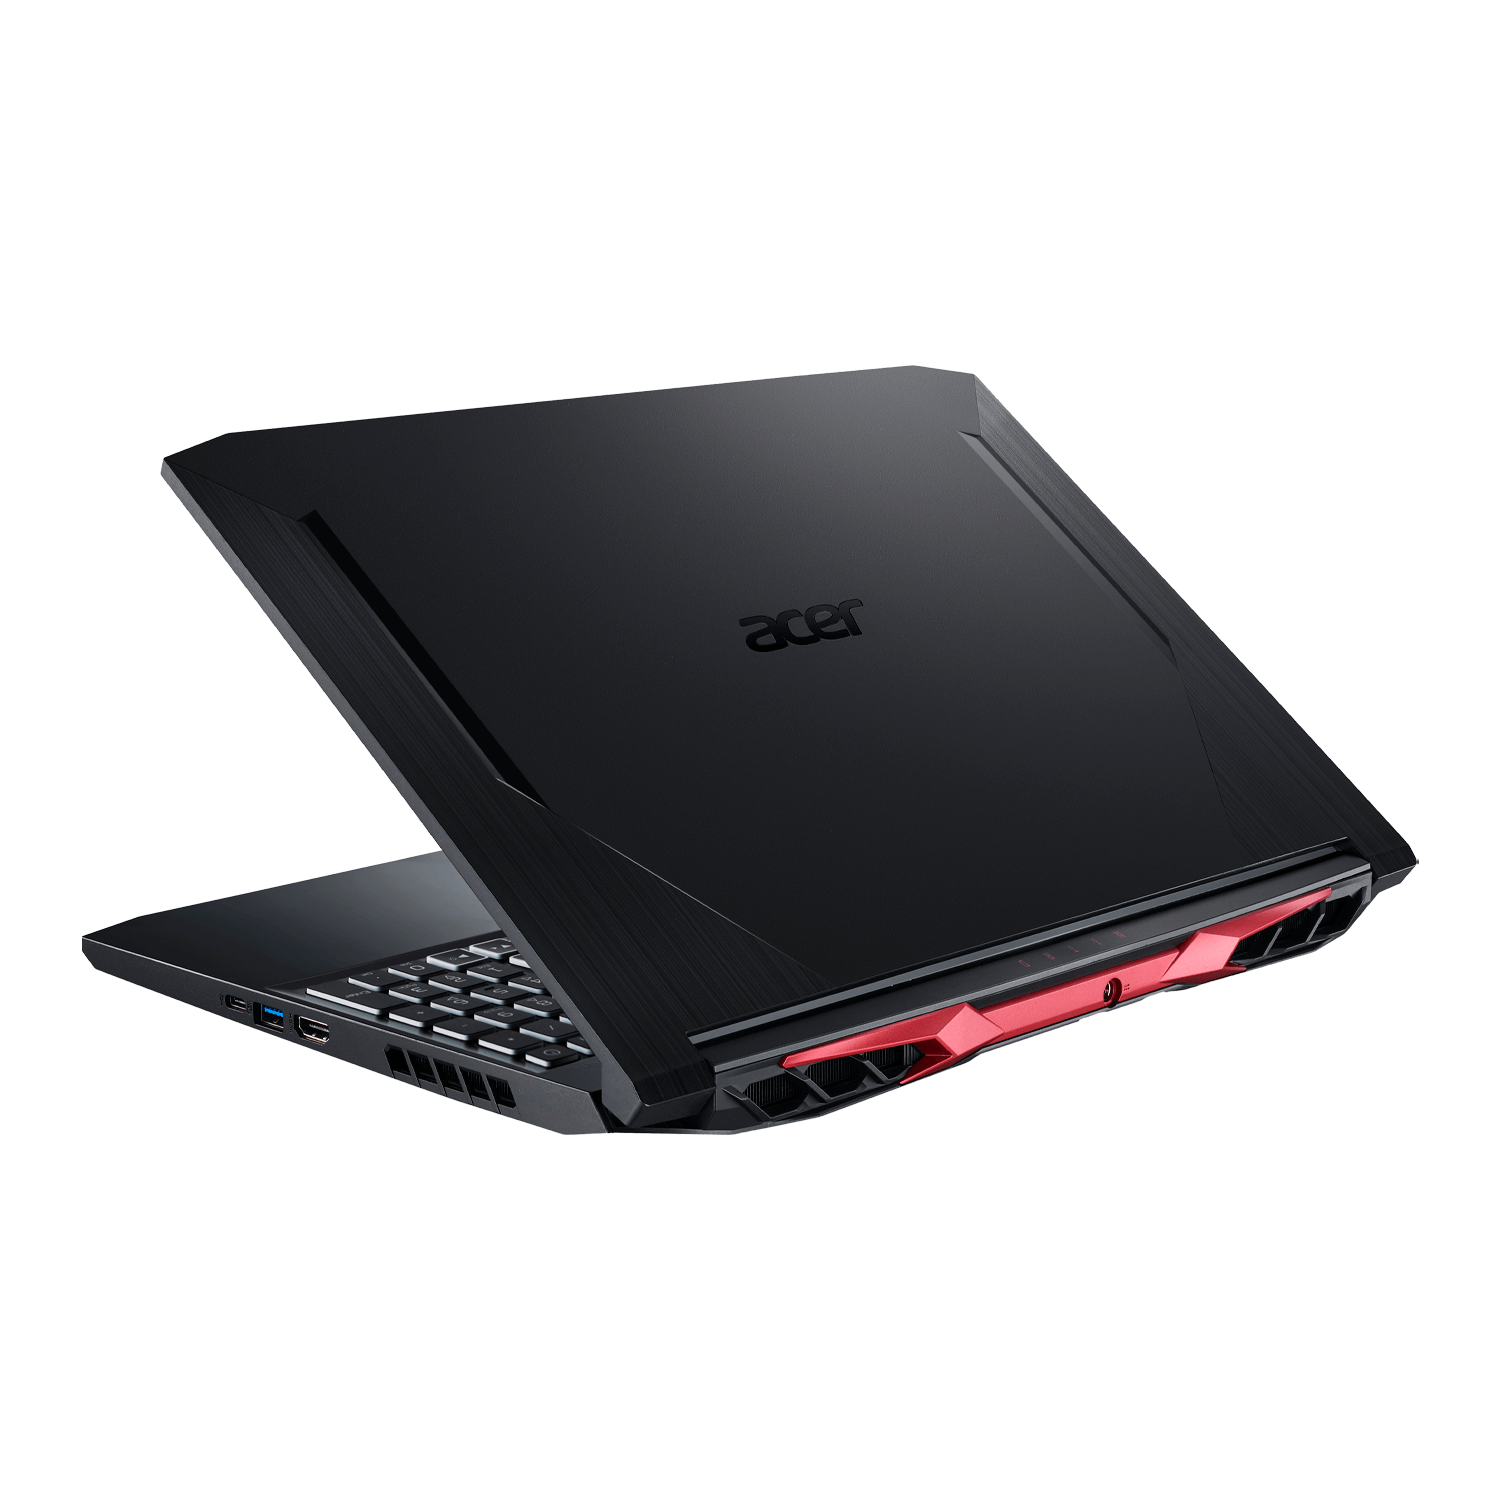 Notebook Acer AN515-55-55M1 i5-10300H / 512GB SSD / 8GB RAM / Tela 15.6" / GTX 1650 4GB